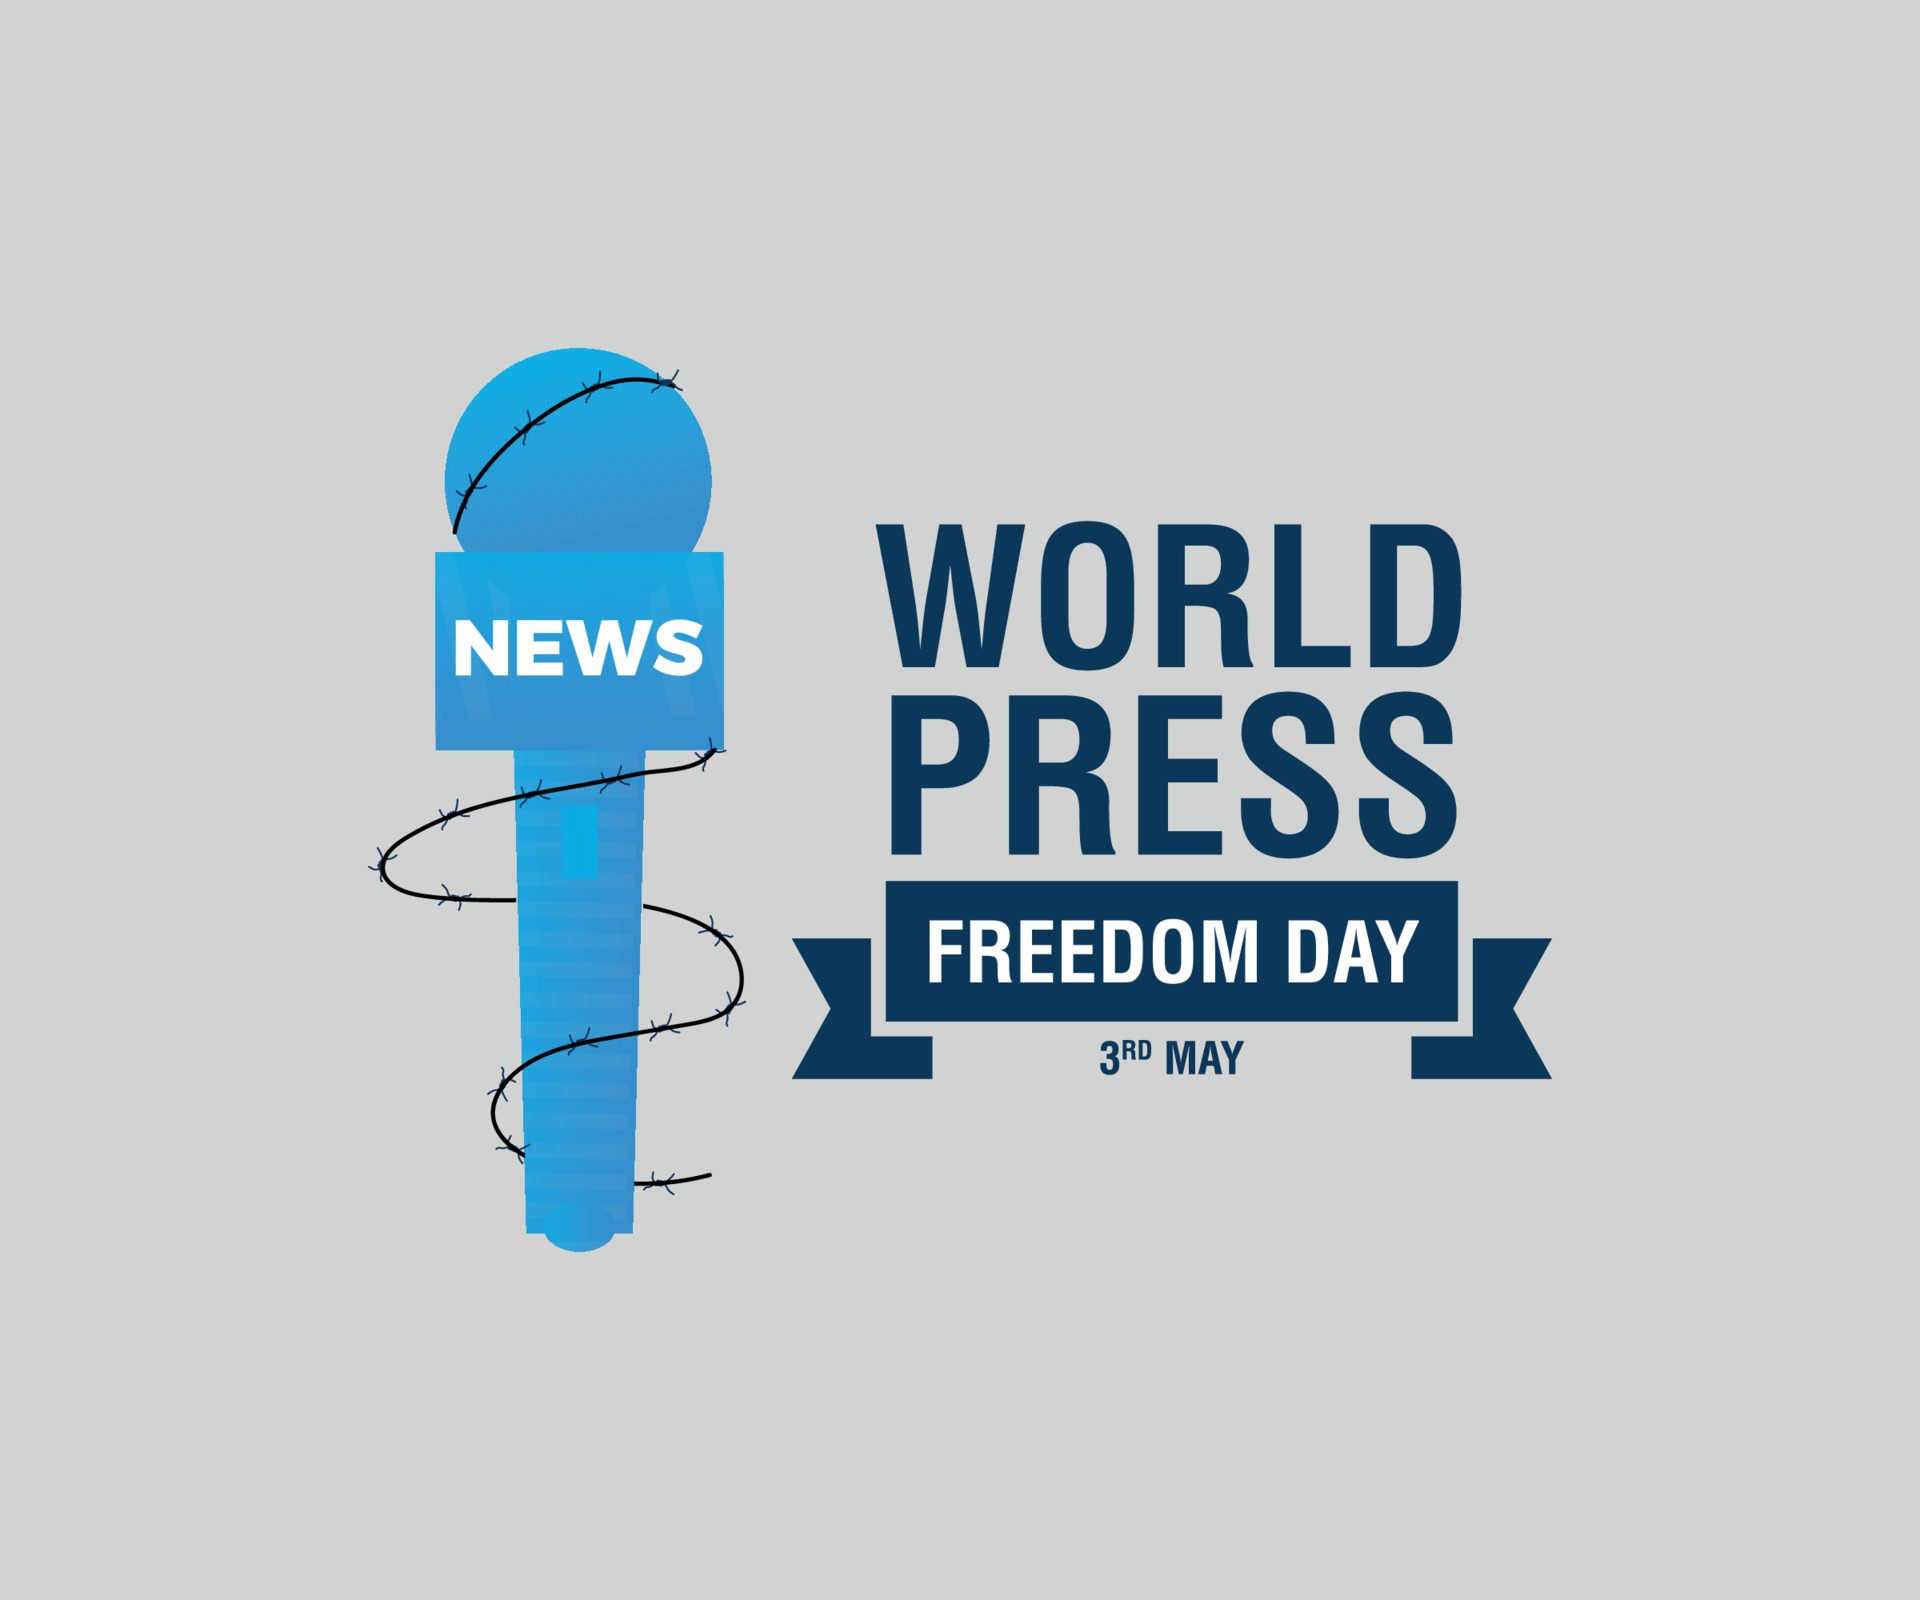 “Journalism under digital siege” as World commemorates Press Freedom Day